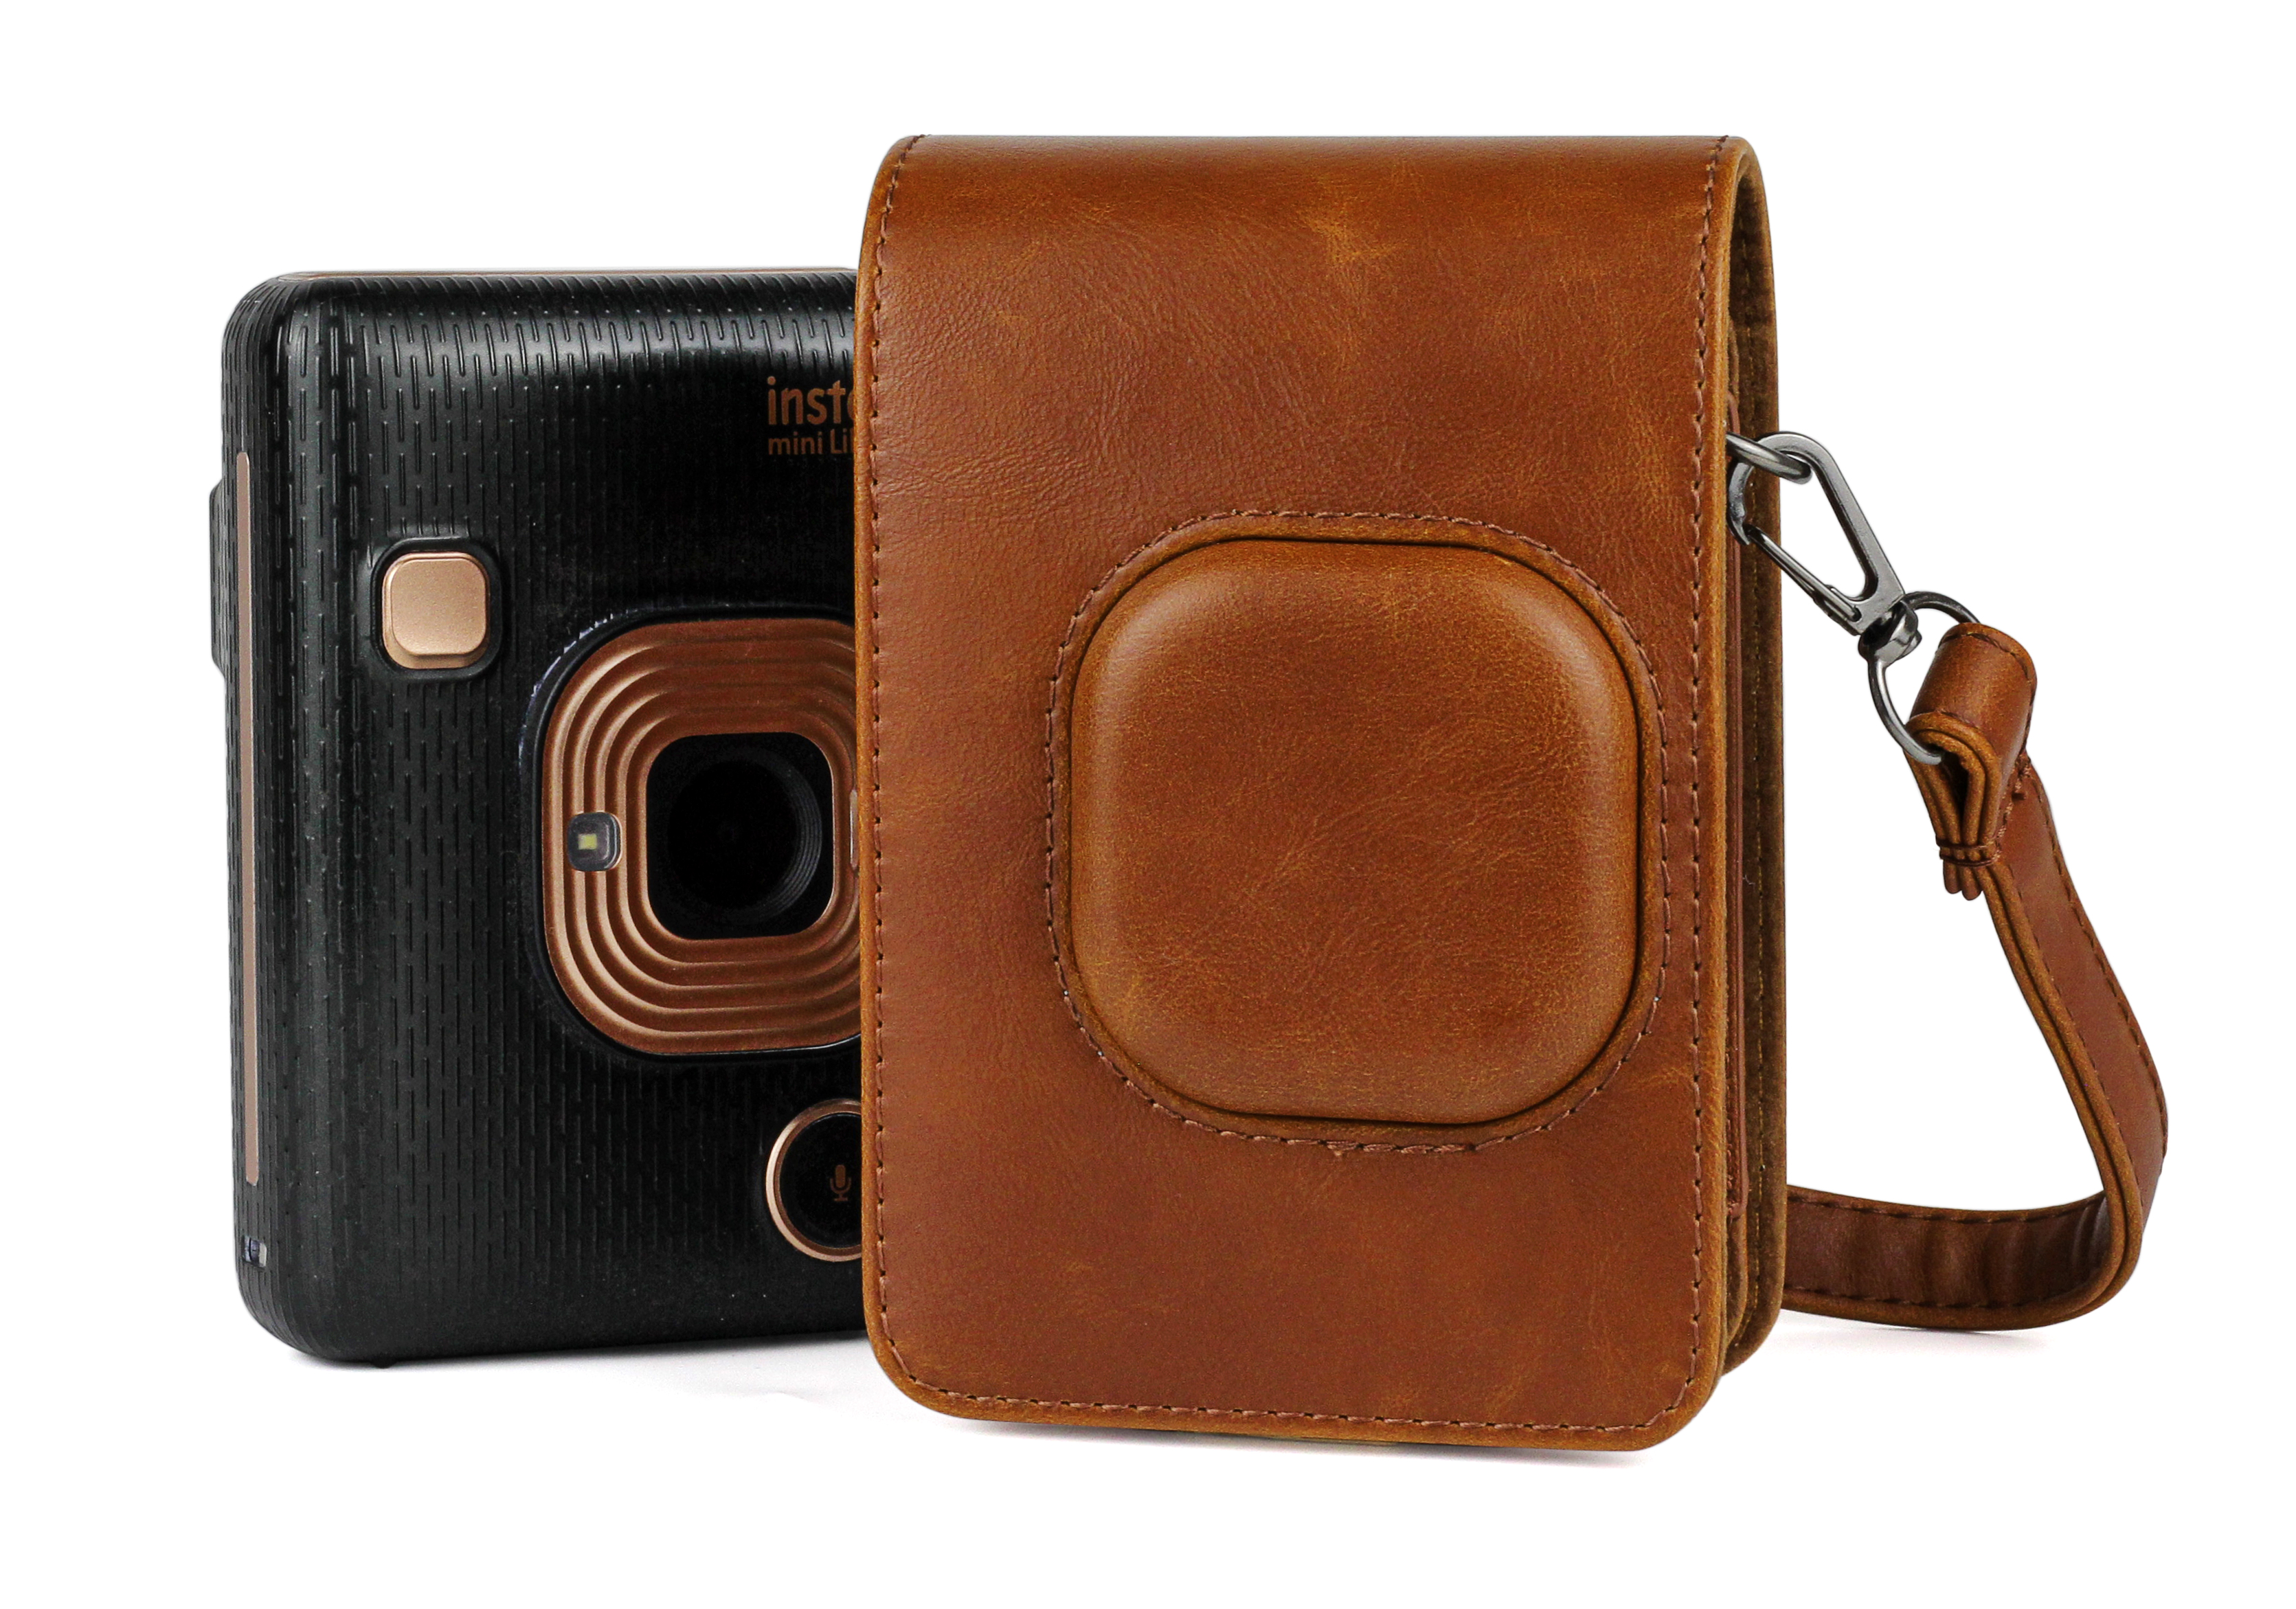 For FUJIFILM Instax Mini Liplay Hybird Instant Film Camera Retro PU Leather Case Carry Shoulder Bag Black Brown White